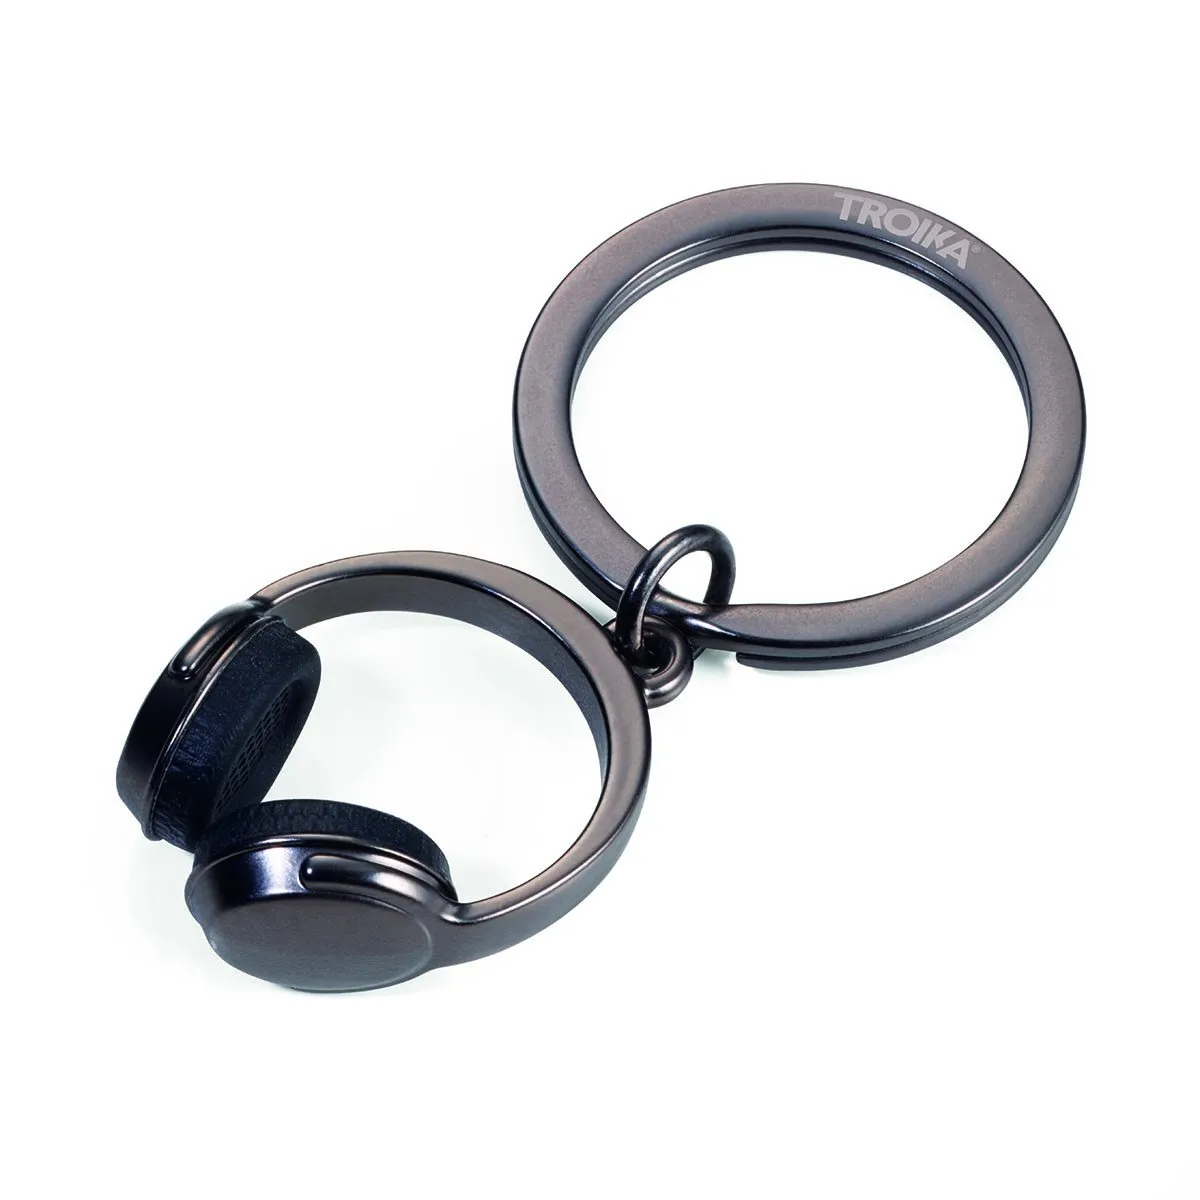 Schlüsselanhänger mit Kopfhörer-Motiv